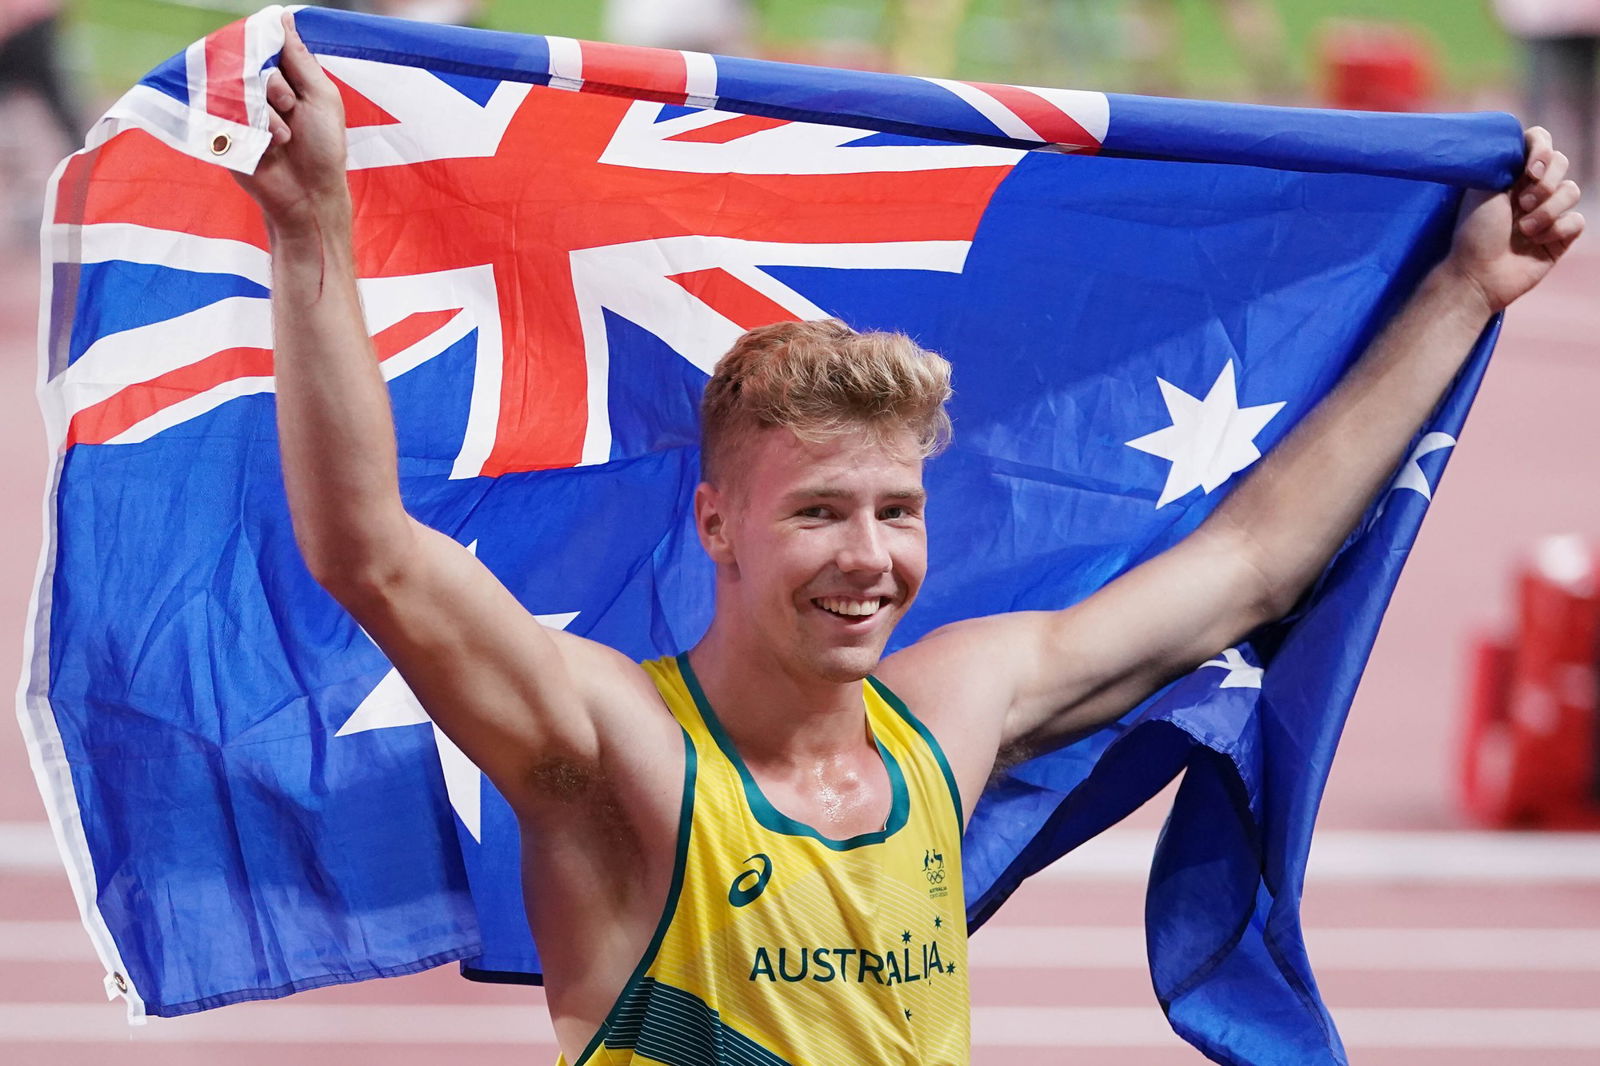 Ash Moloney holding an Australian flag above his head